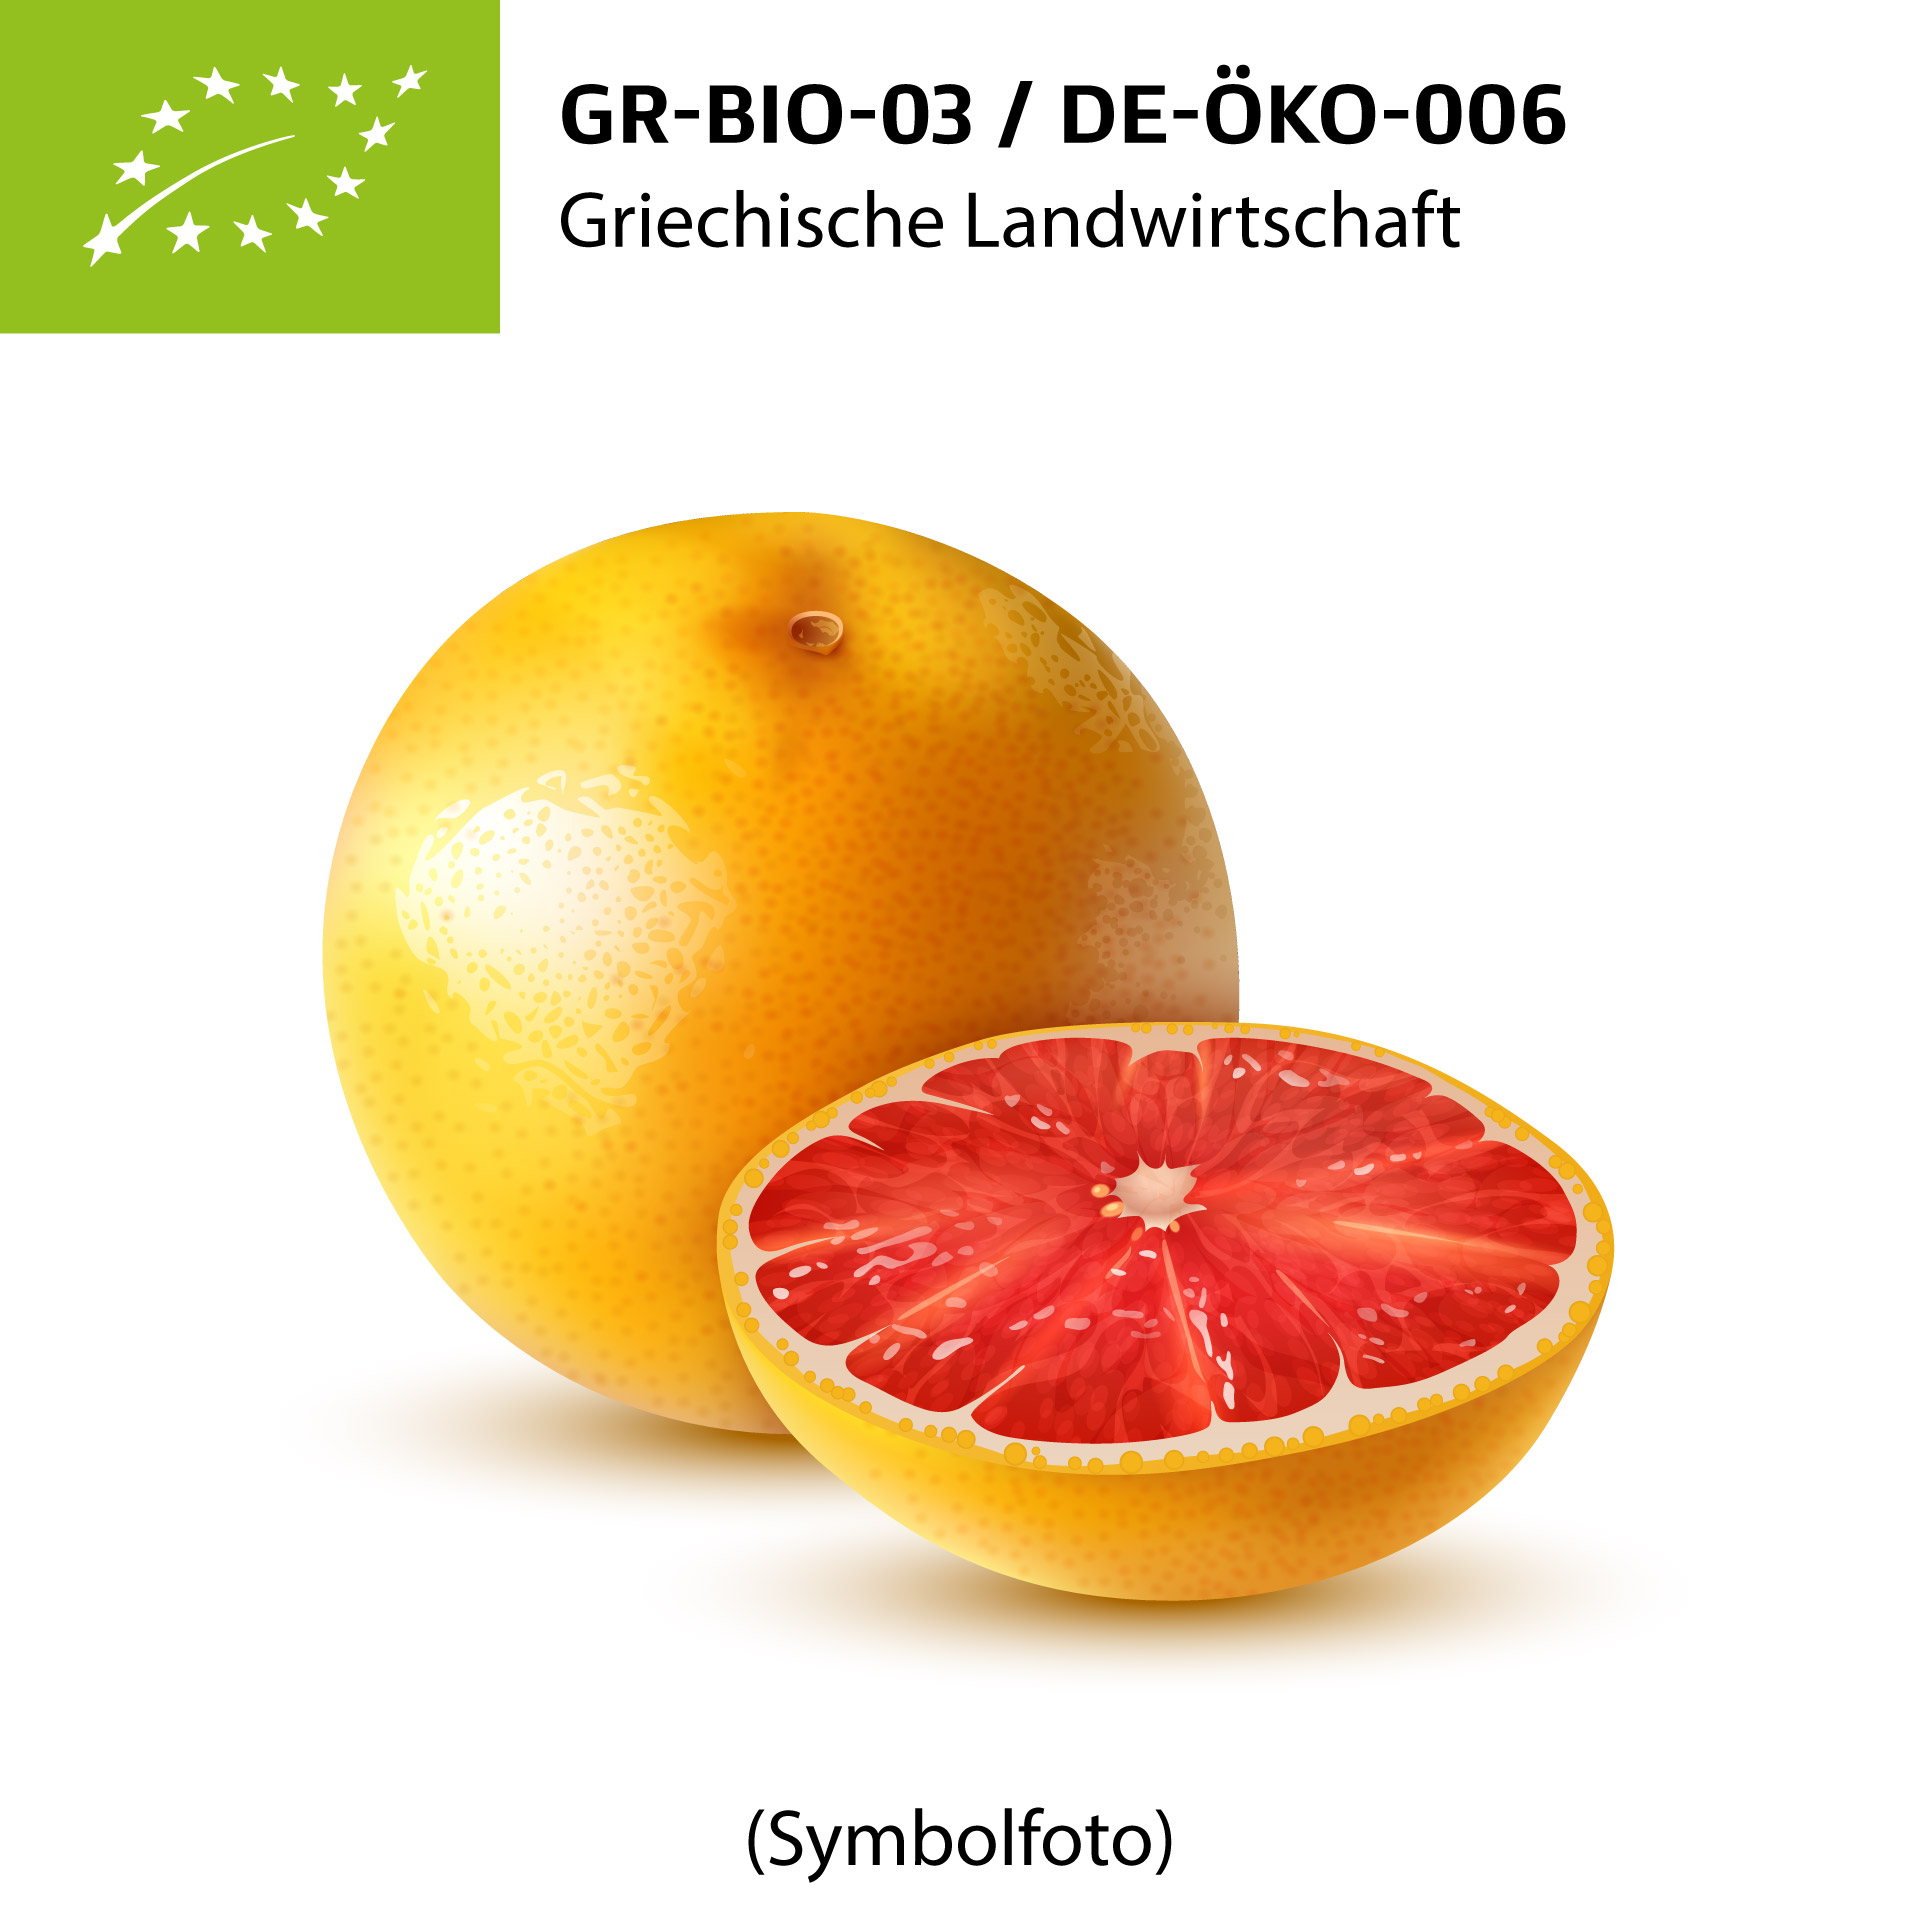  Frische BIO-Grapefruits rot "STAR RUBY" aus Kreta 1 Stück